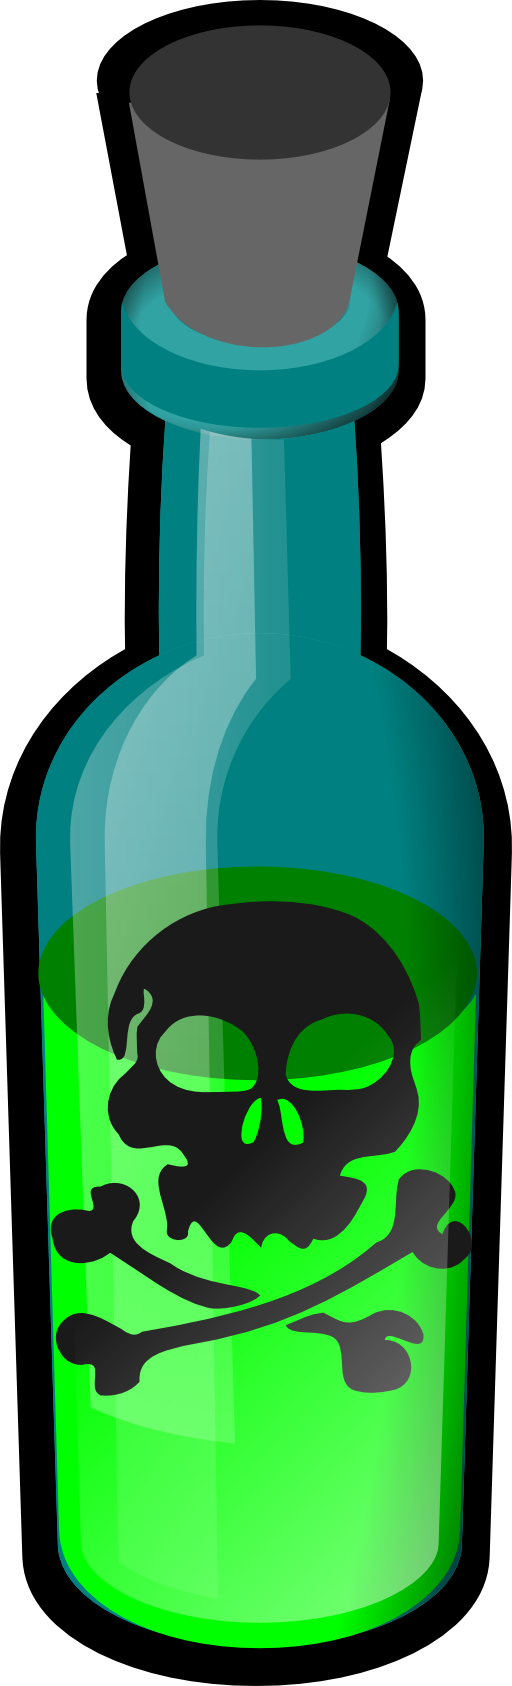 Poison Bottle Clipart